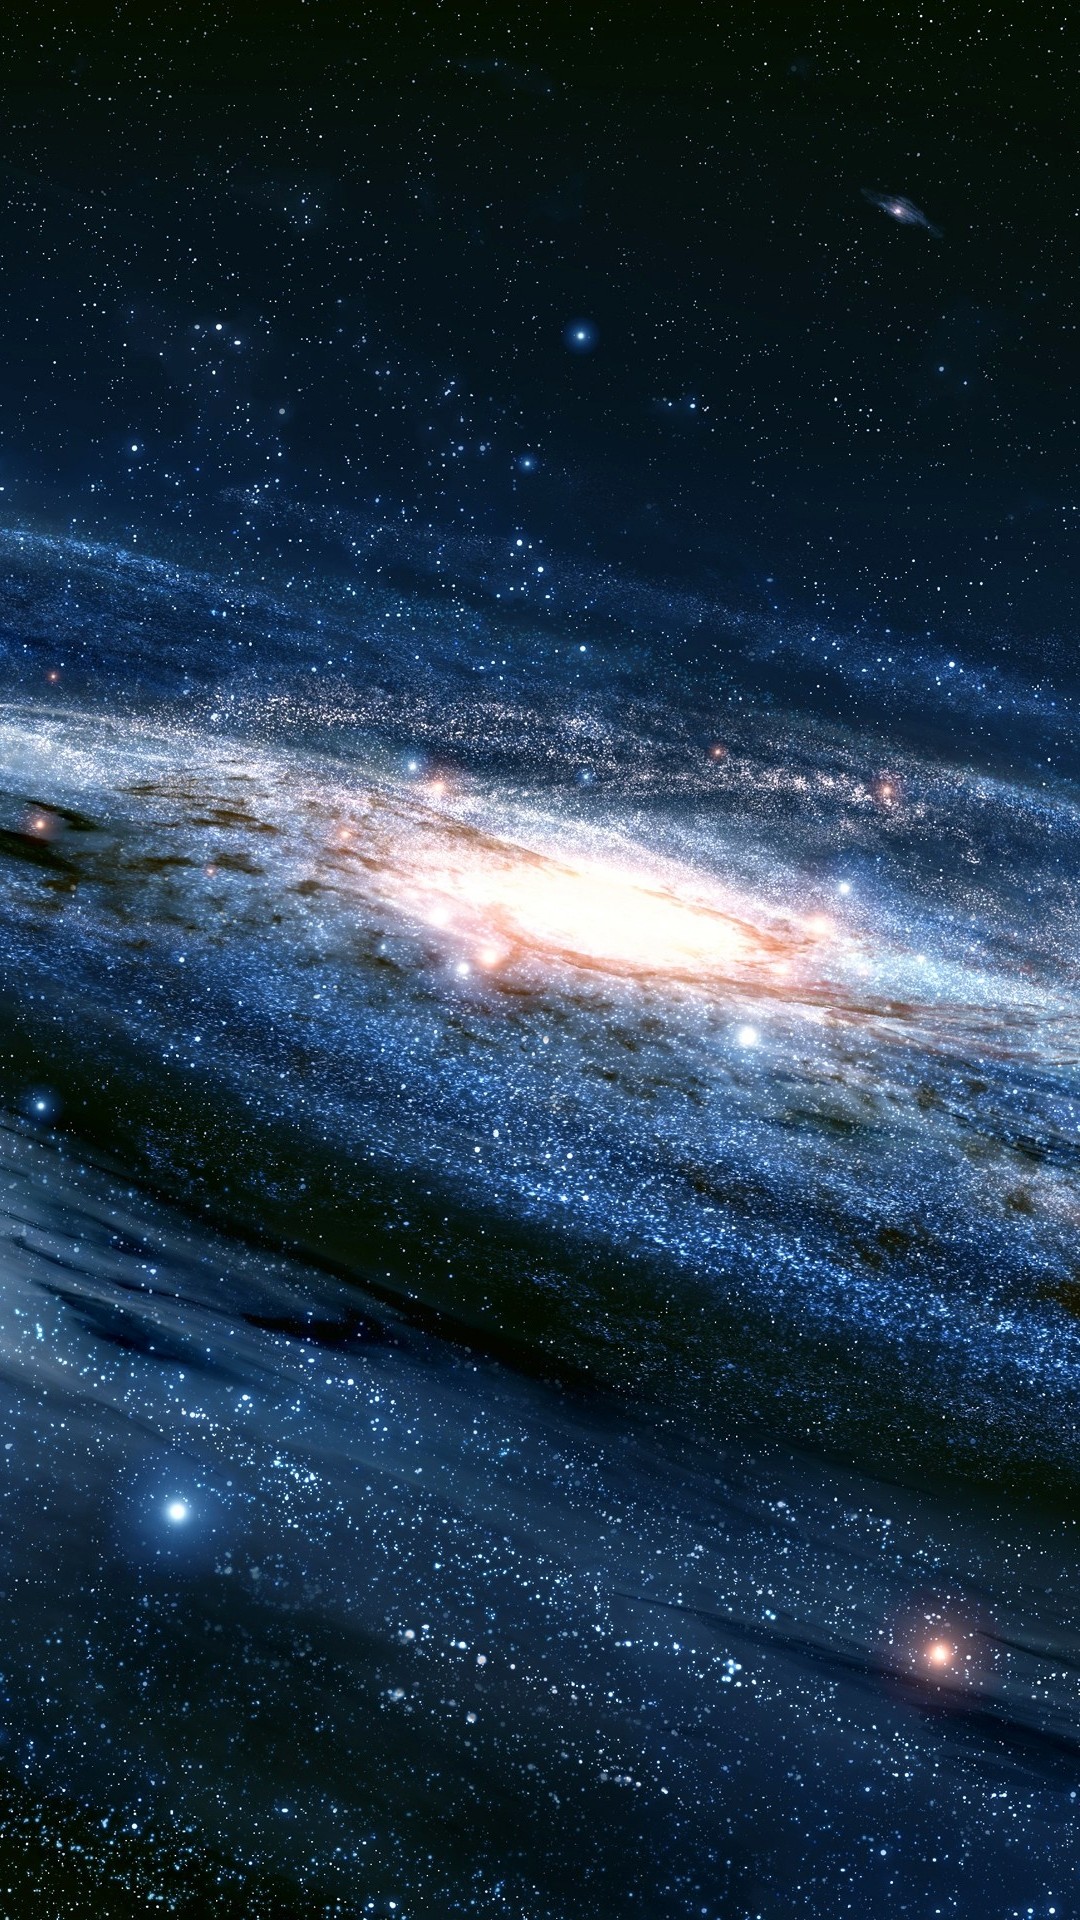 Galaxy Wallpaper 1